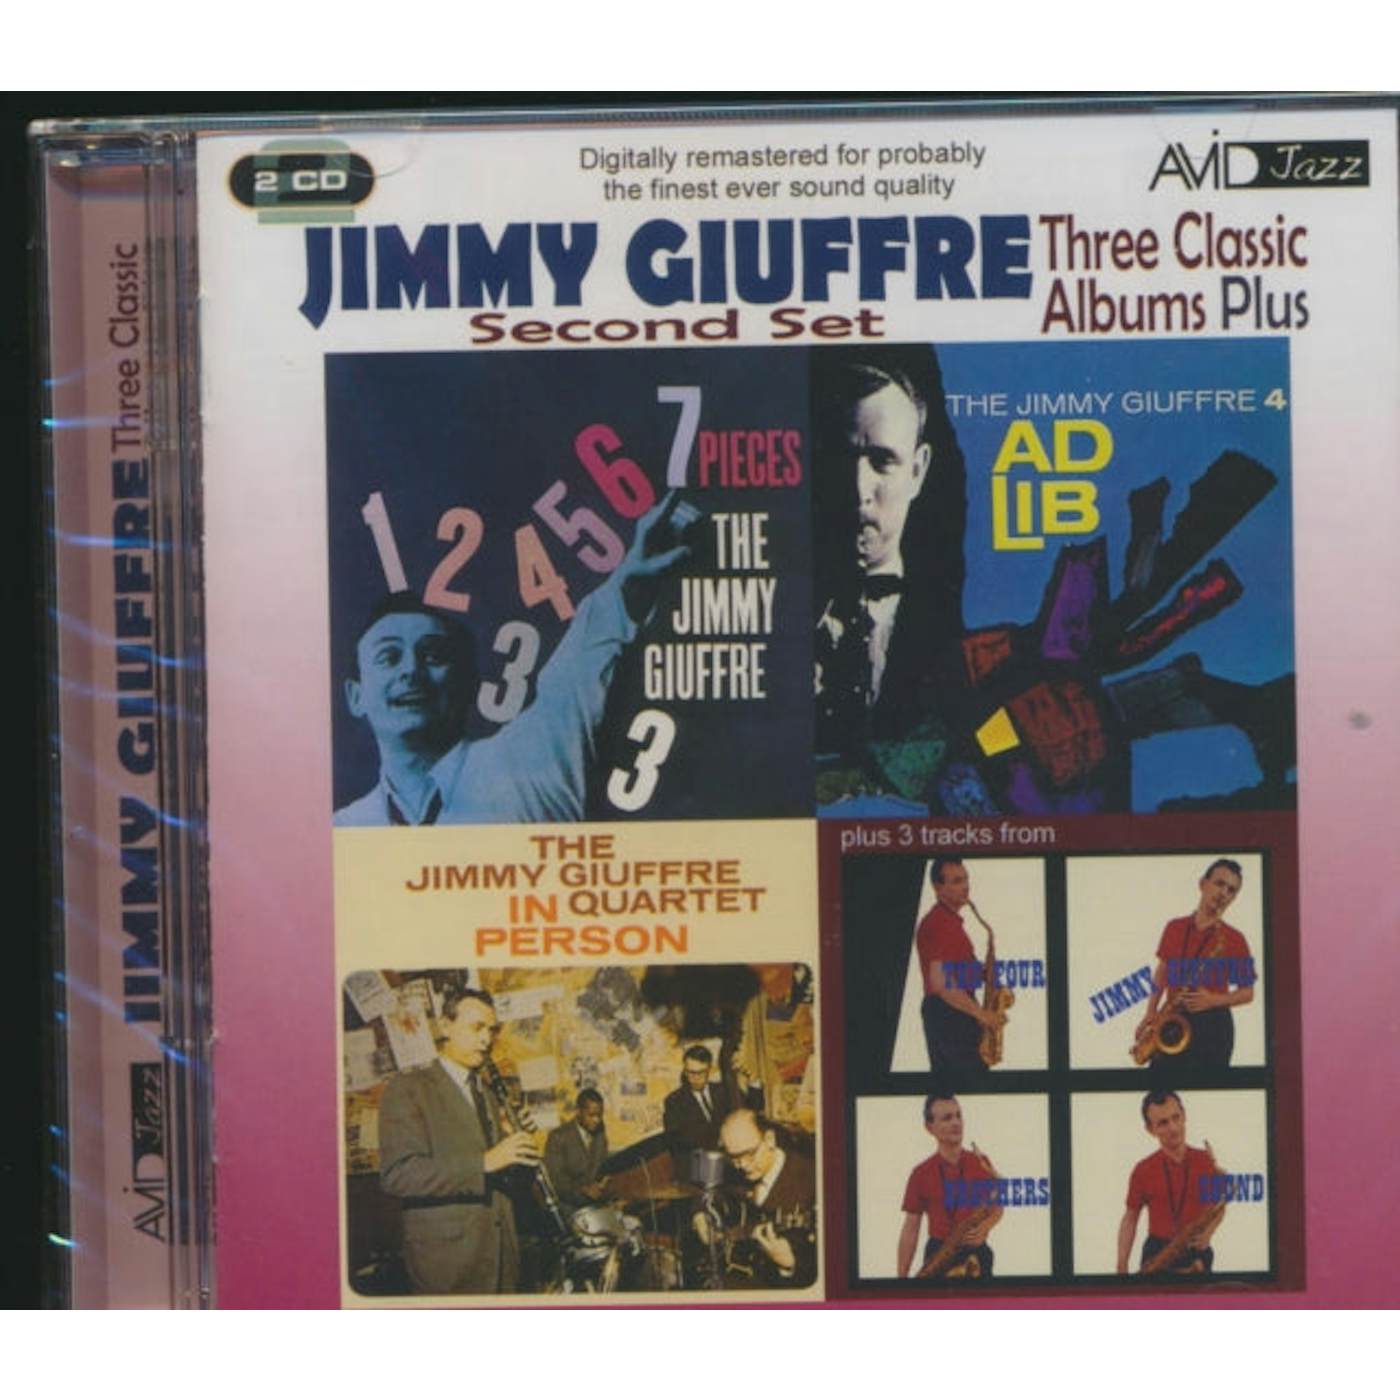 Jimmy Giuffre CD - Three Classic Albums Plus (7 Pieces / Ad Lib / In Person)